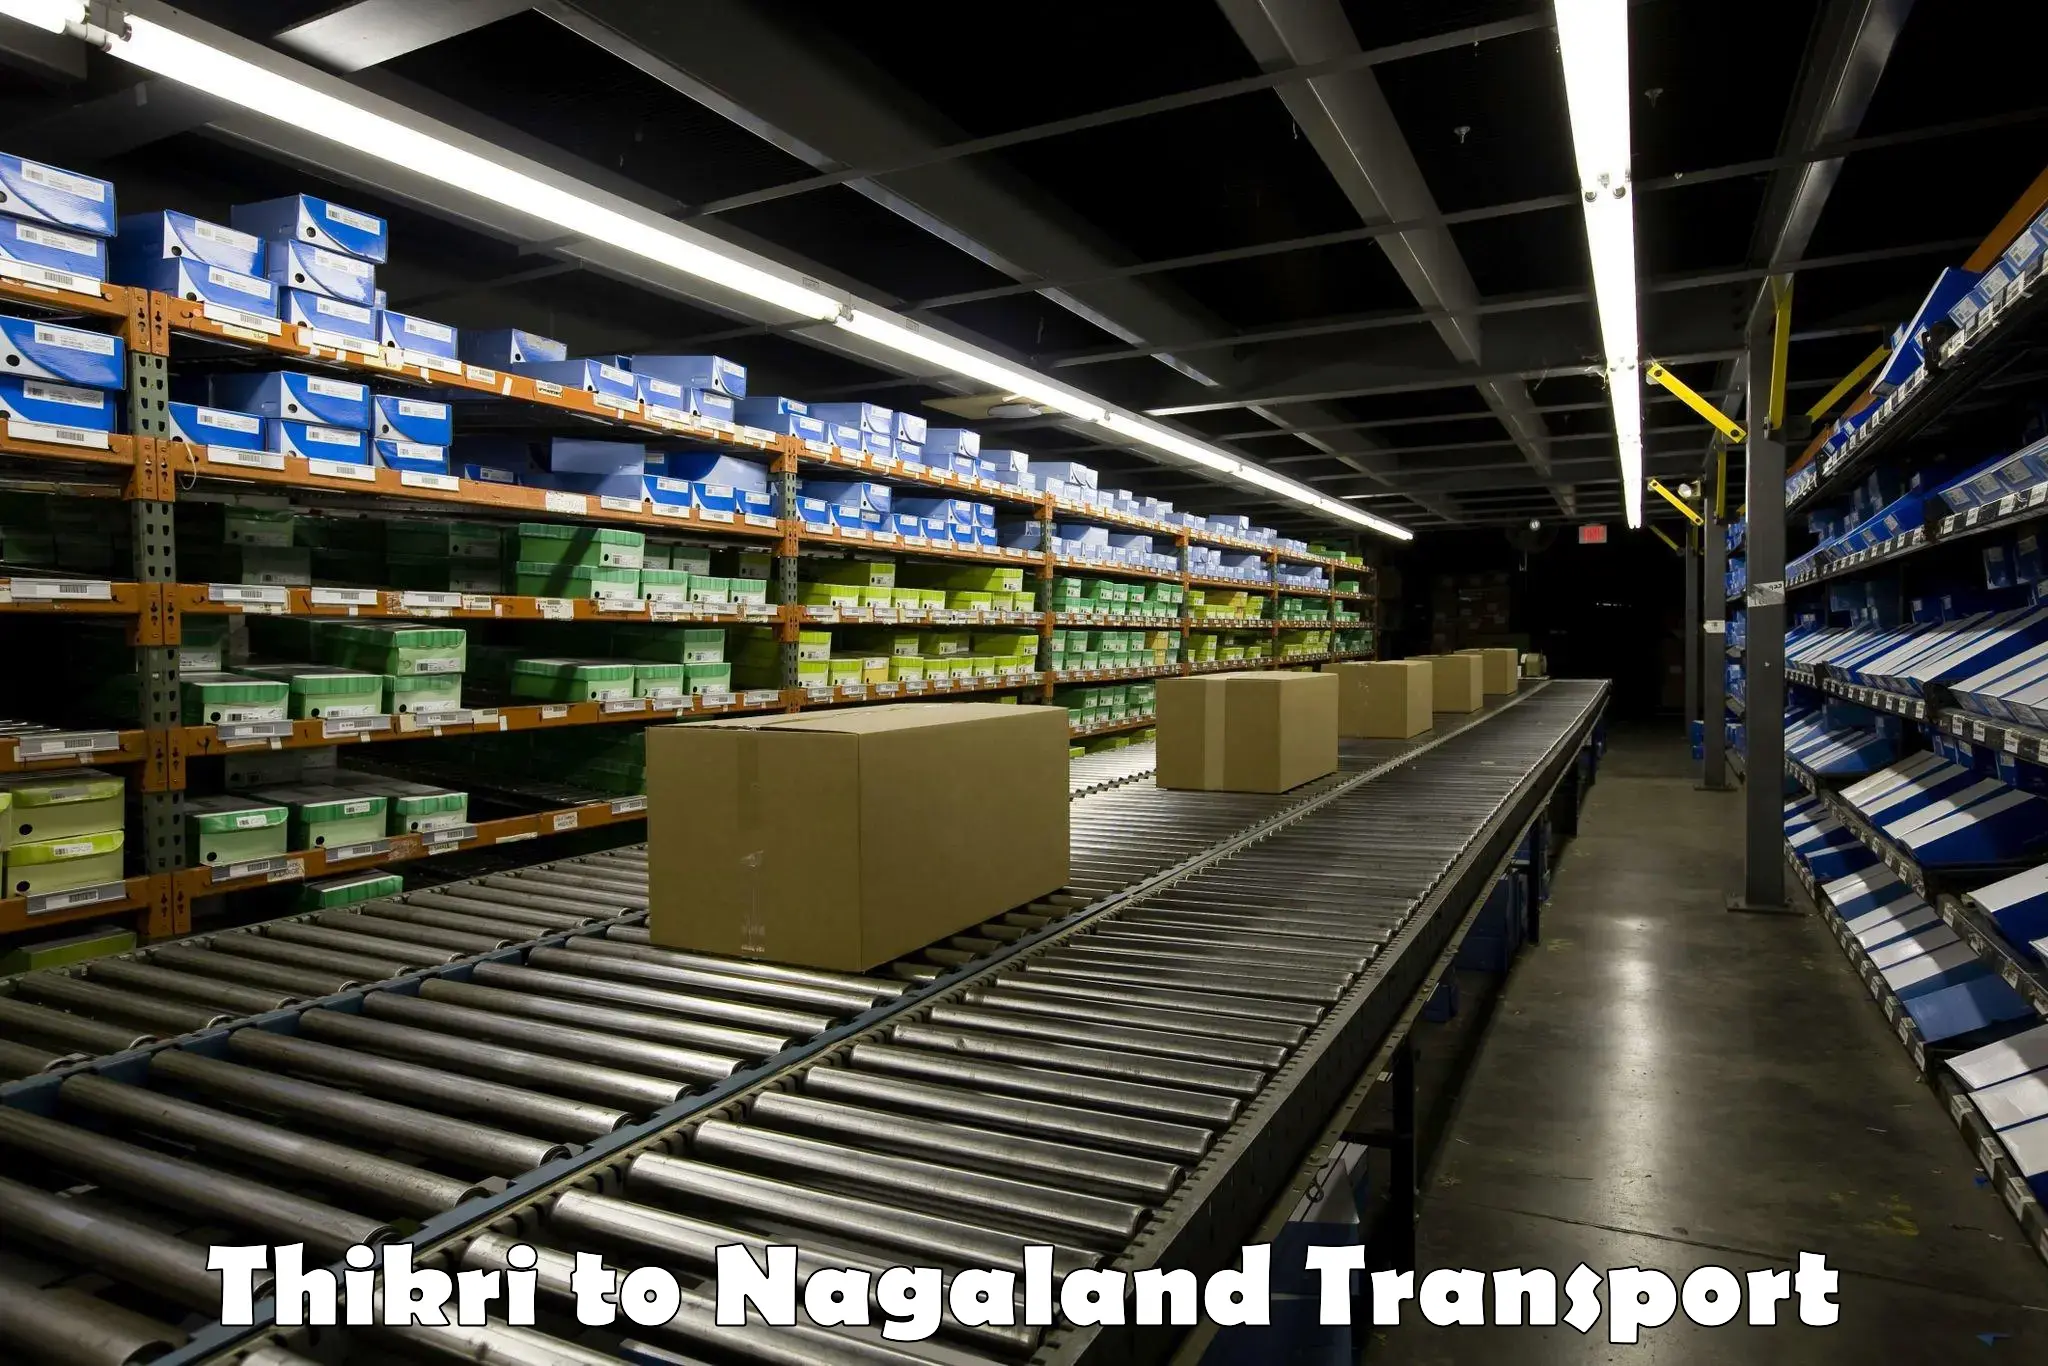 Transport in sharing Thikri to Nagaland